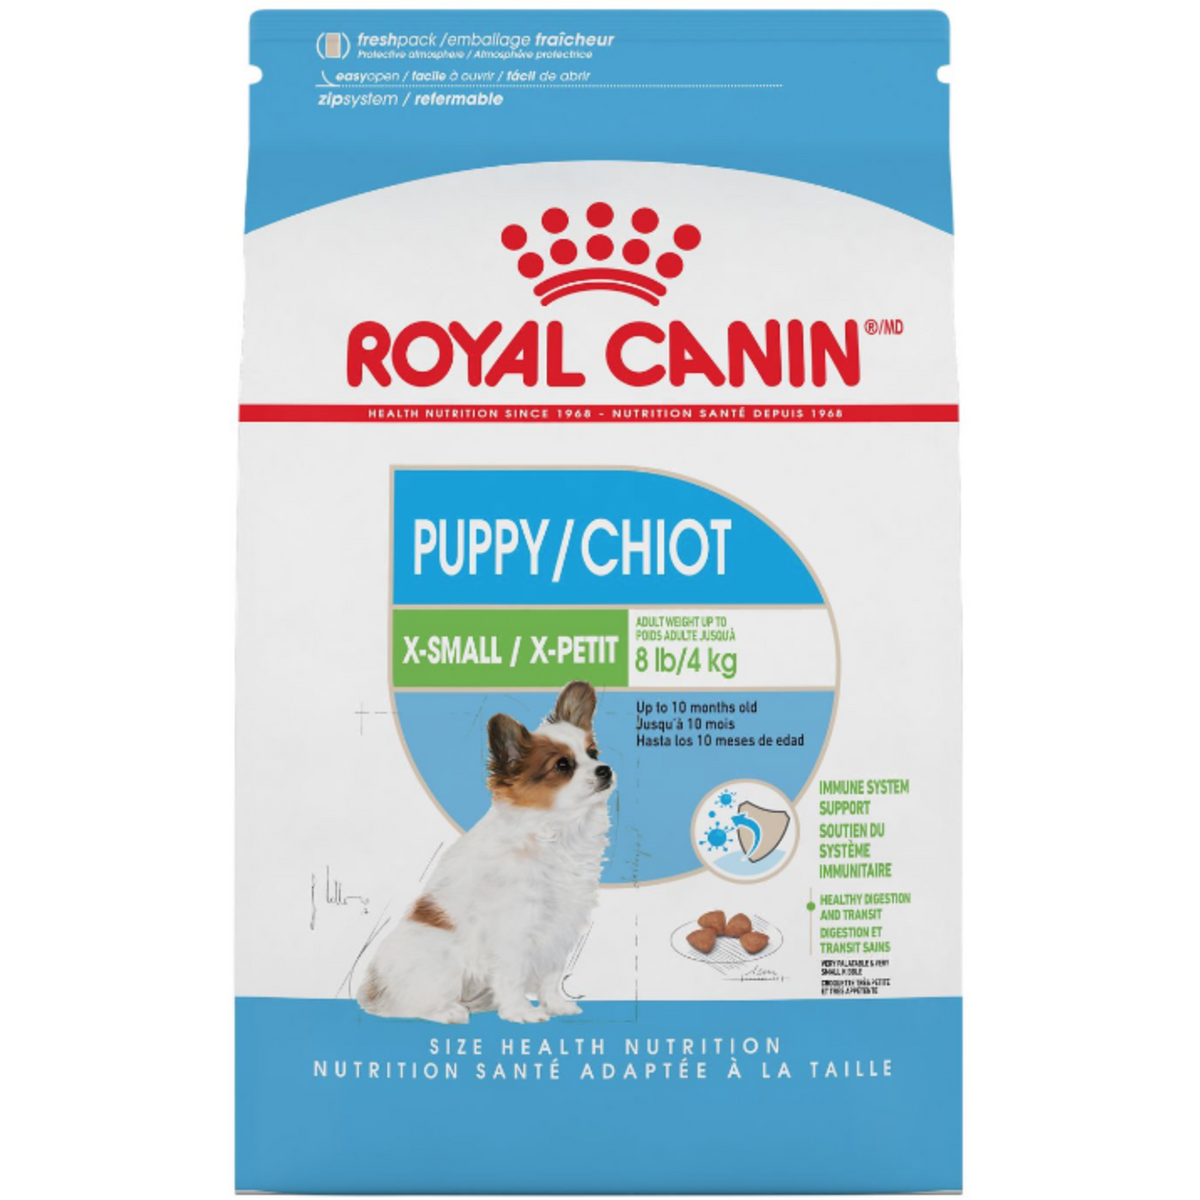 Royal Canin X-SMALL Puppy Dog Food